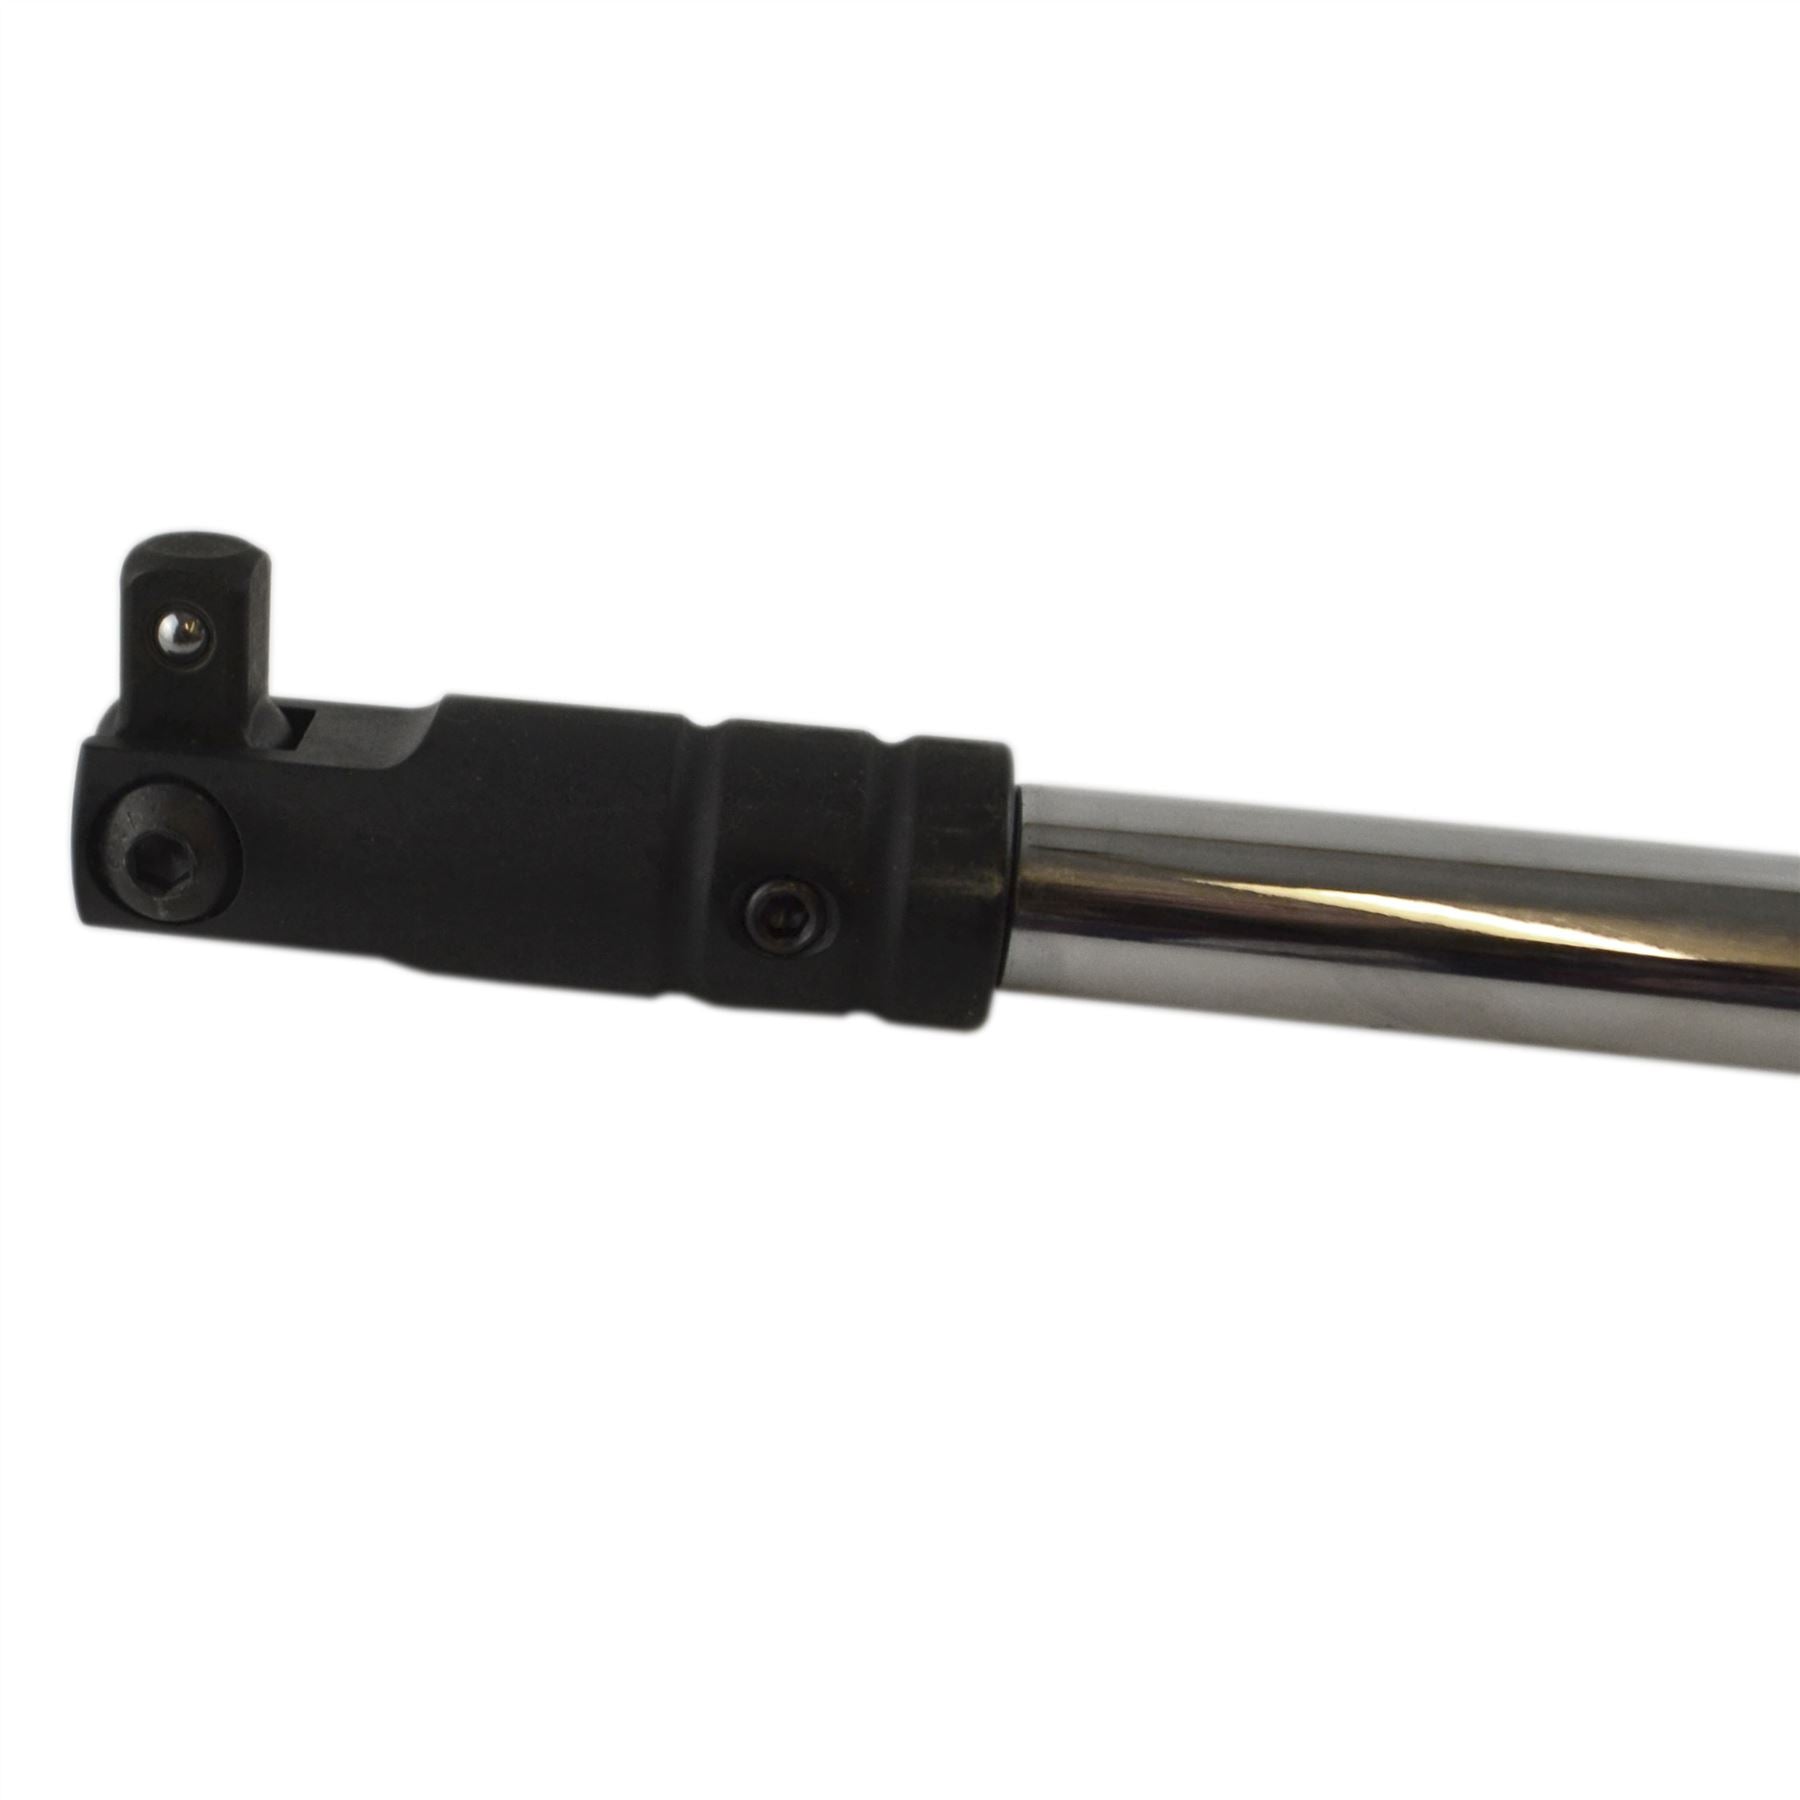 1/2" Drive Power / Breaker / Knuckle Socket Wrench Bar 24" Total Length